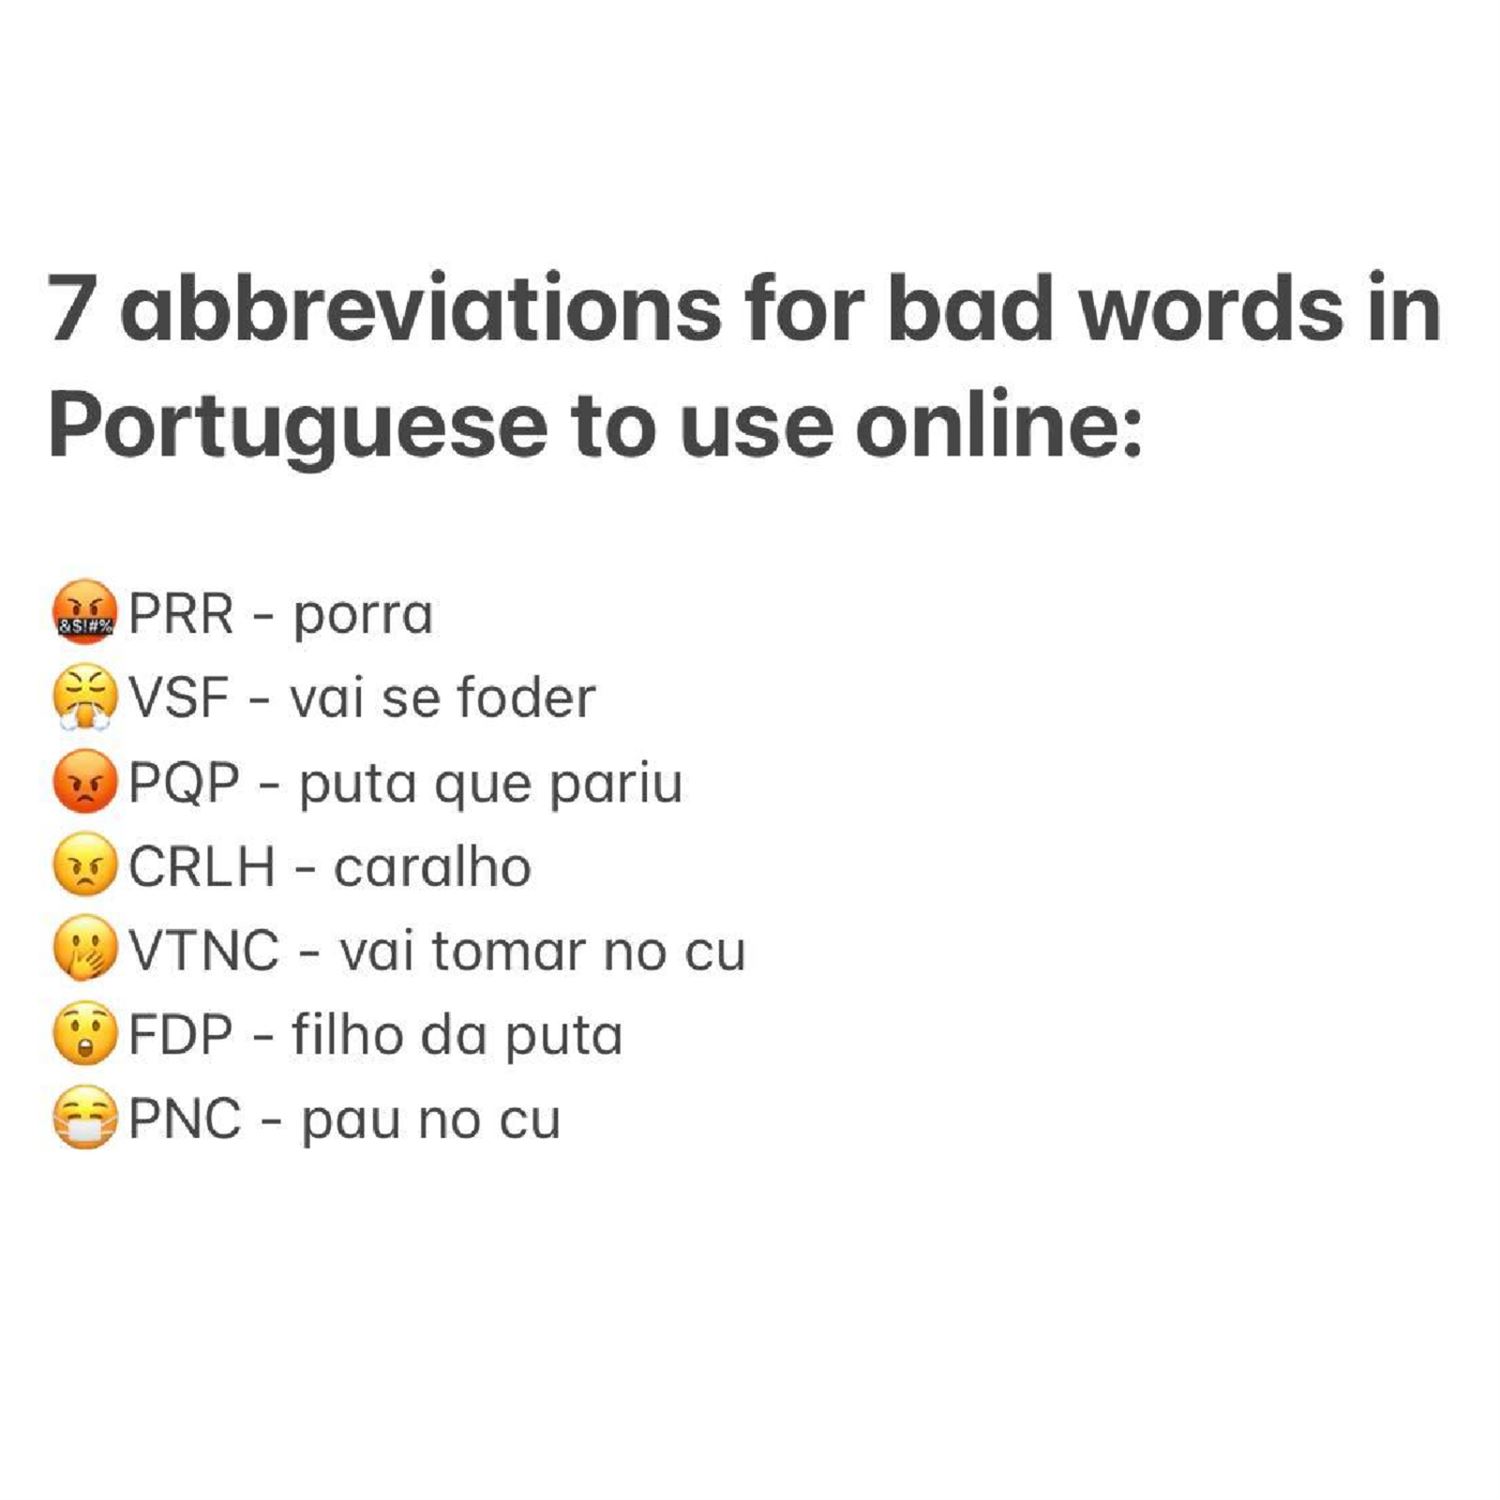 Portuguese swear words sound so nice